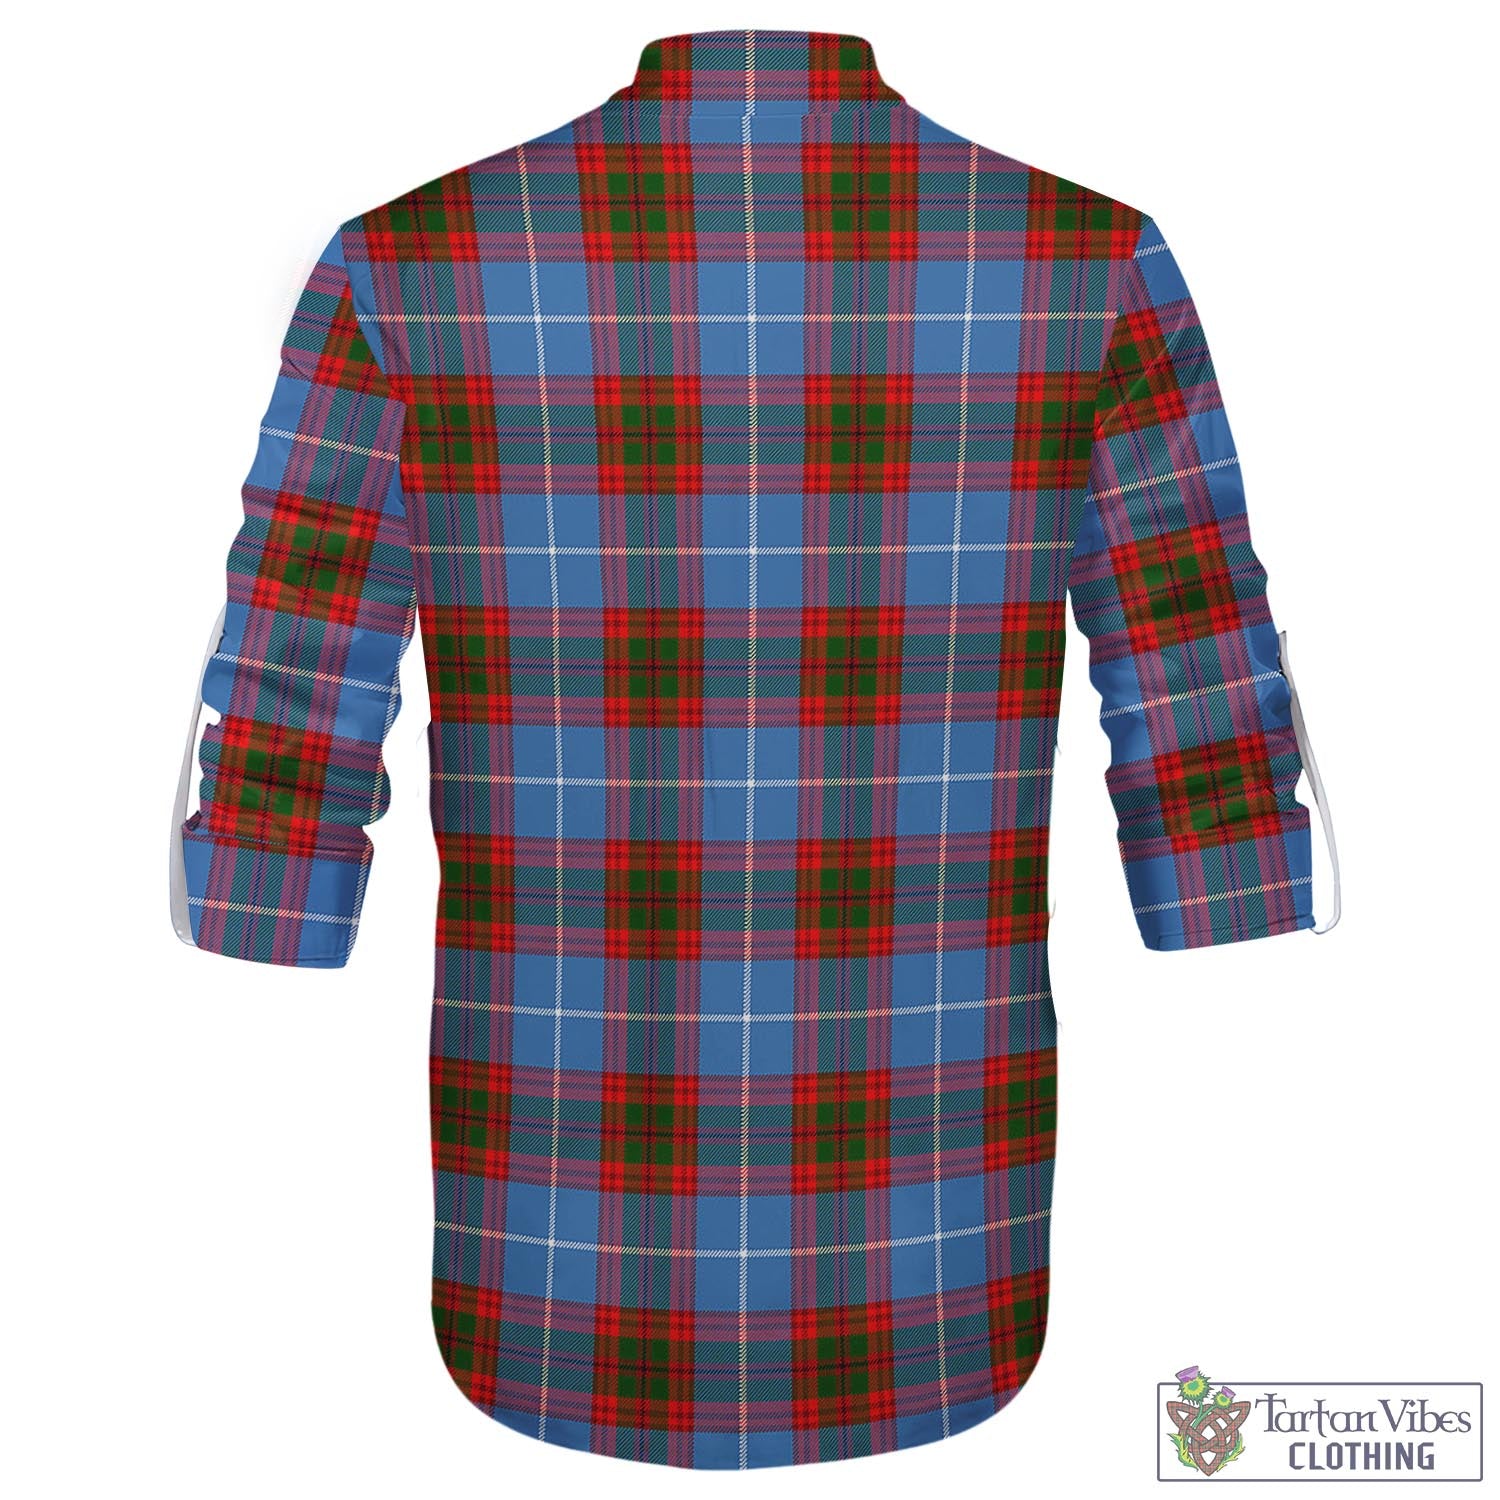 Tartan Vibes Clothing Preston Tartan Men's Scottish Traditional Jacobite Ghillie Kilt Shirt with Family Crest